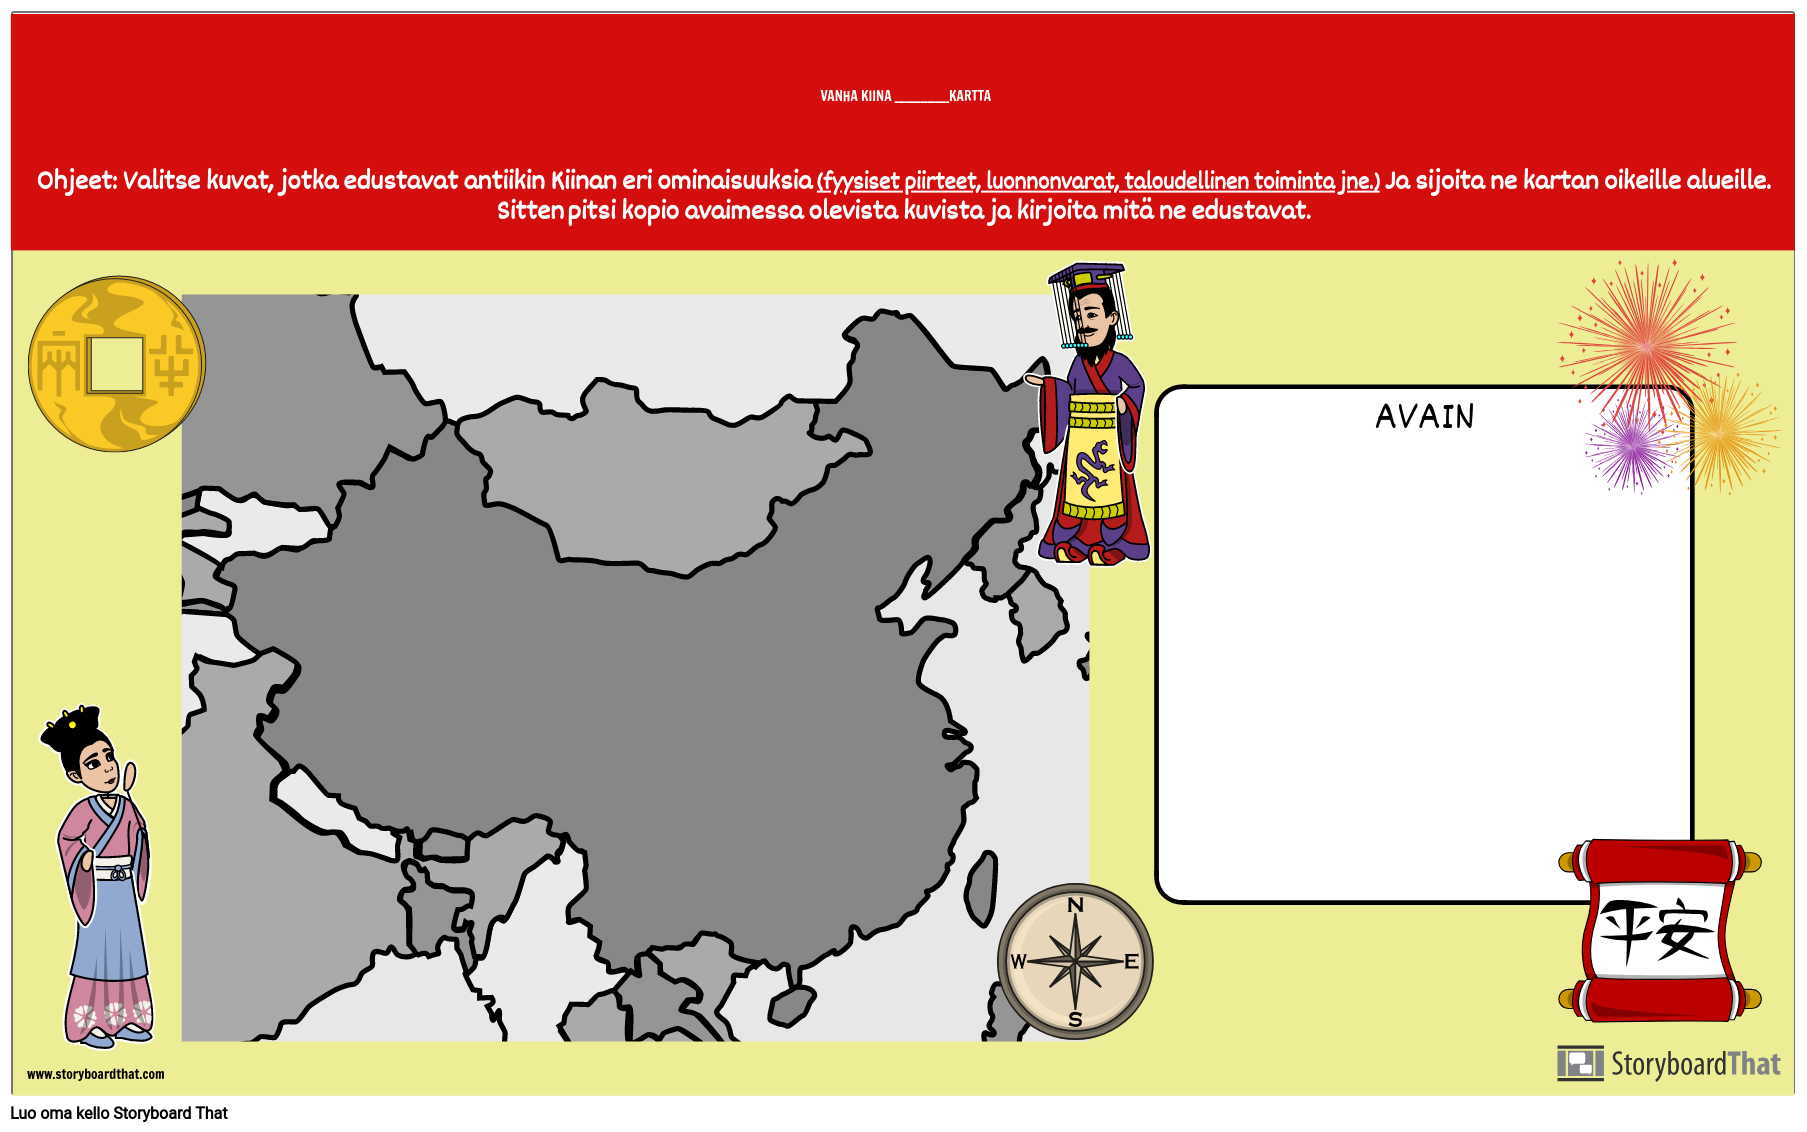 Muinainen Kiina luo oma Karttasi Storyboard od Strane fi-examples